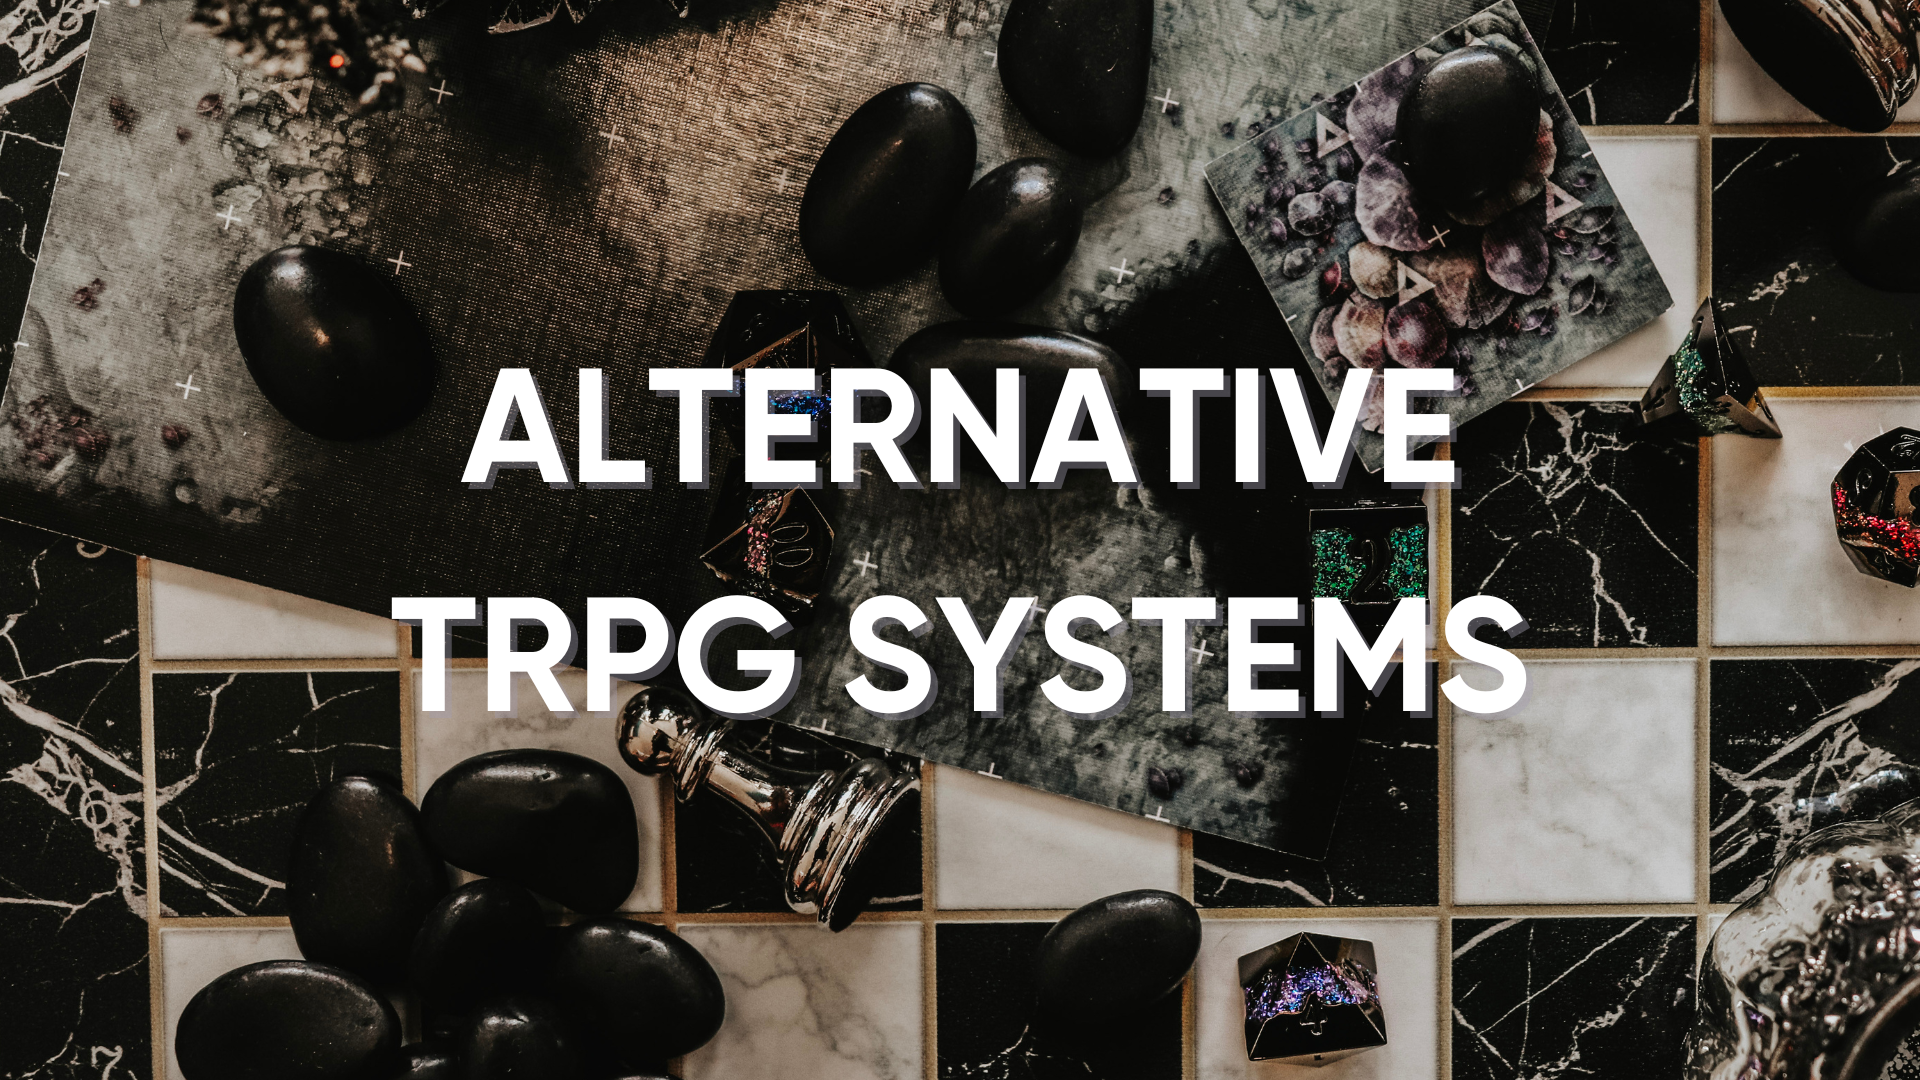 Beyond D&D: Exploring Alternative TRPG Systems